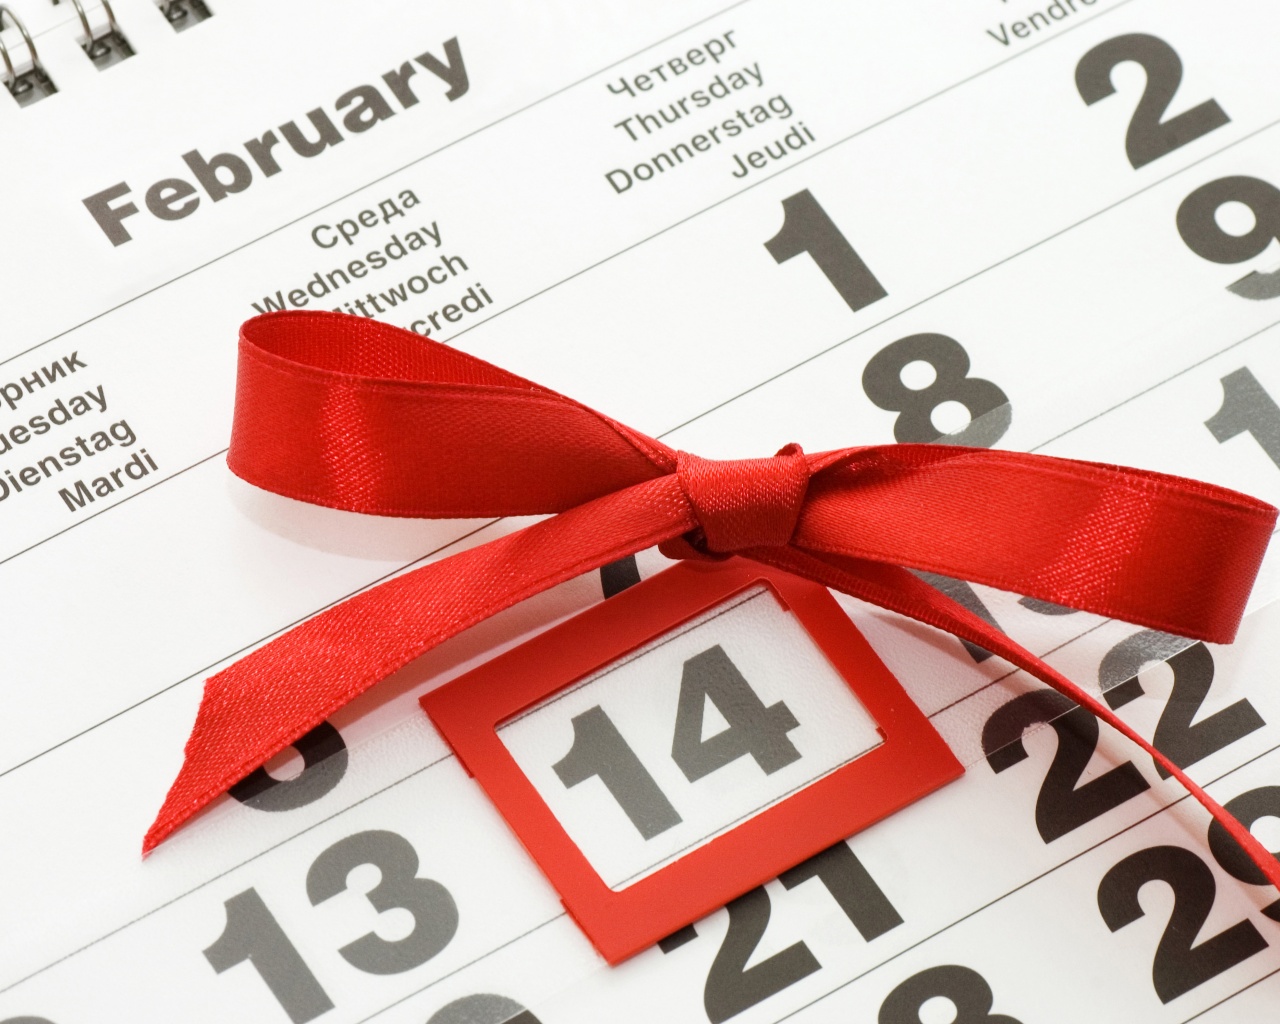 February 14 - Saint Valentines Day